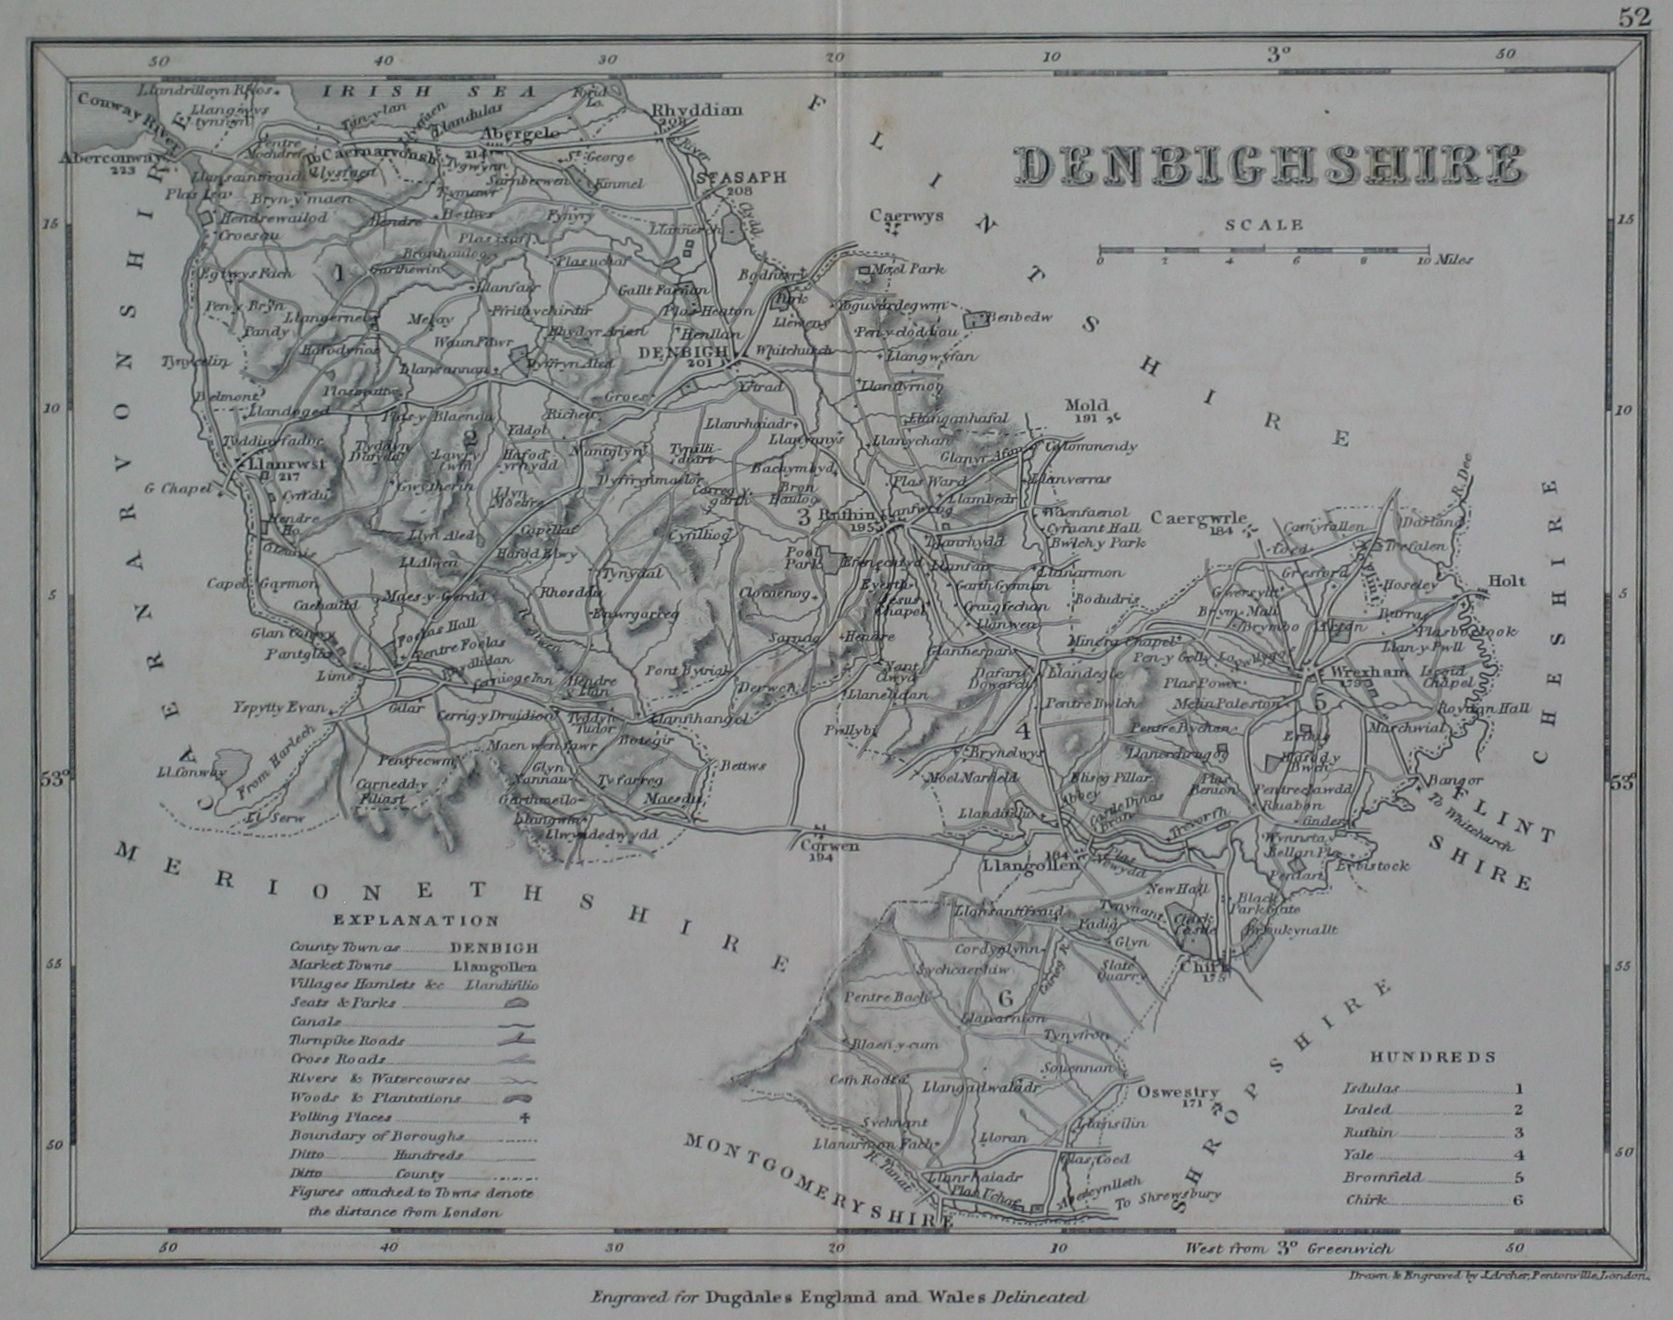 Denbighshire